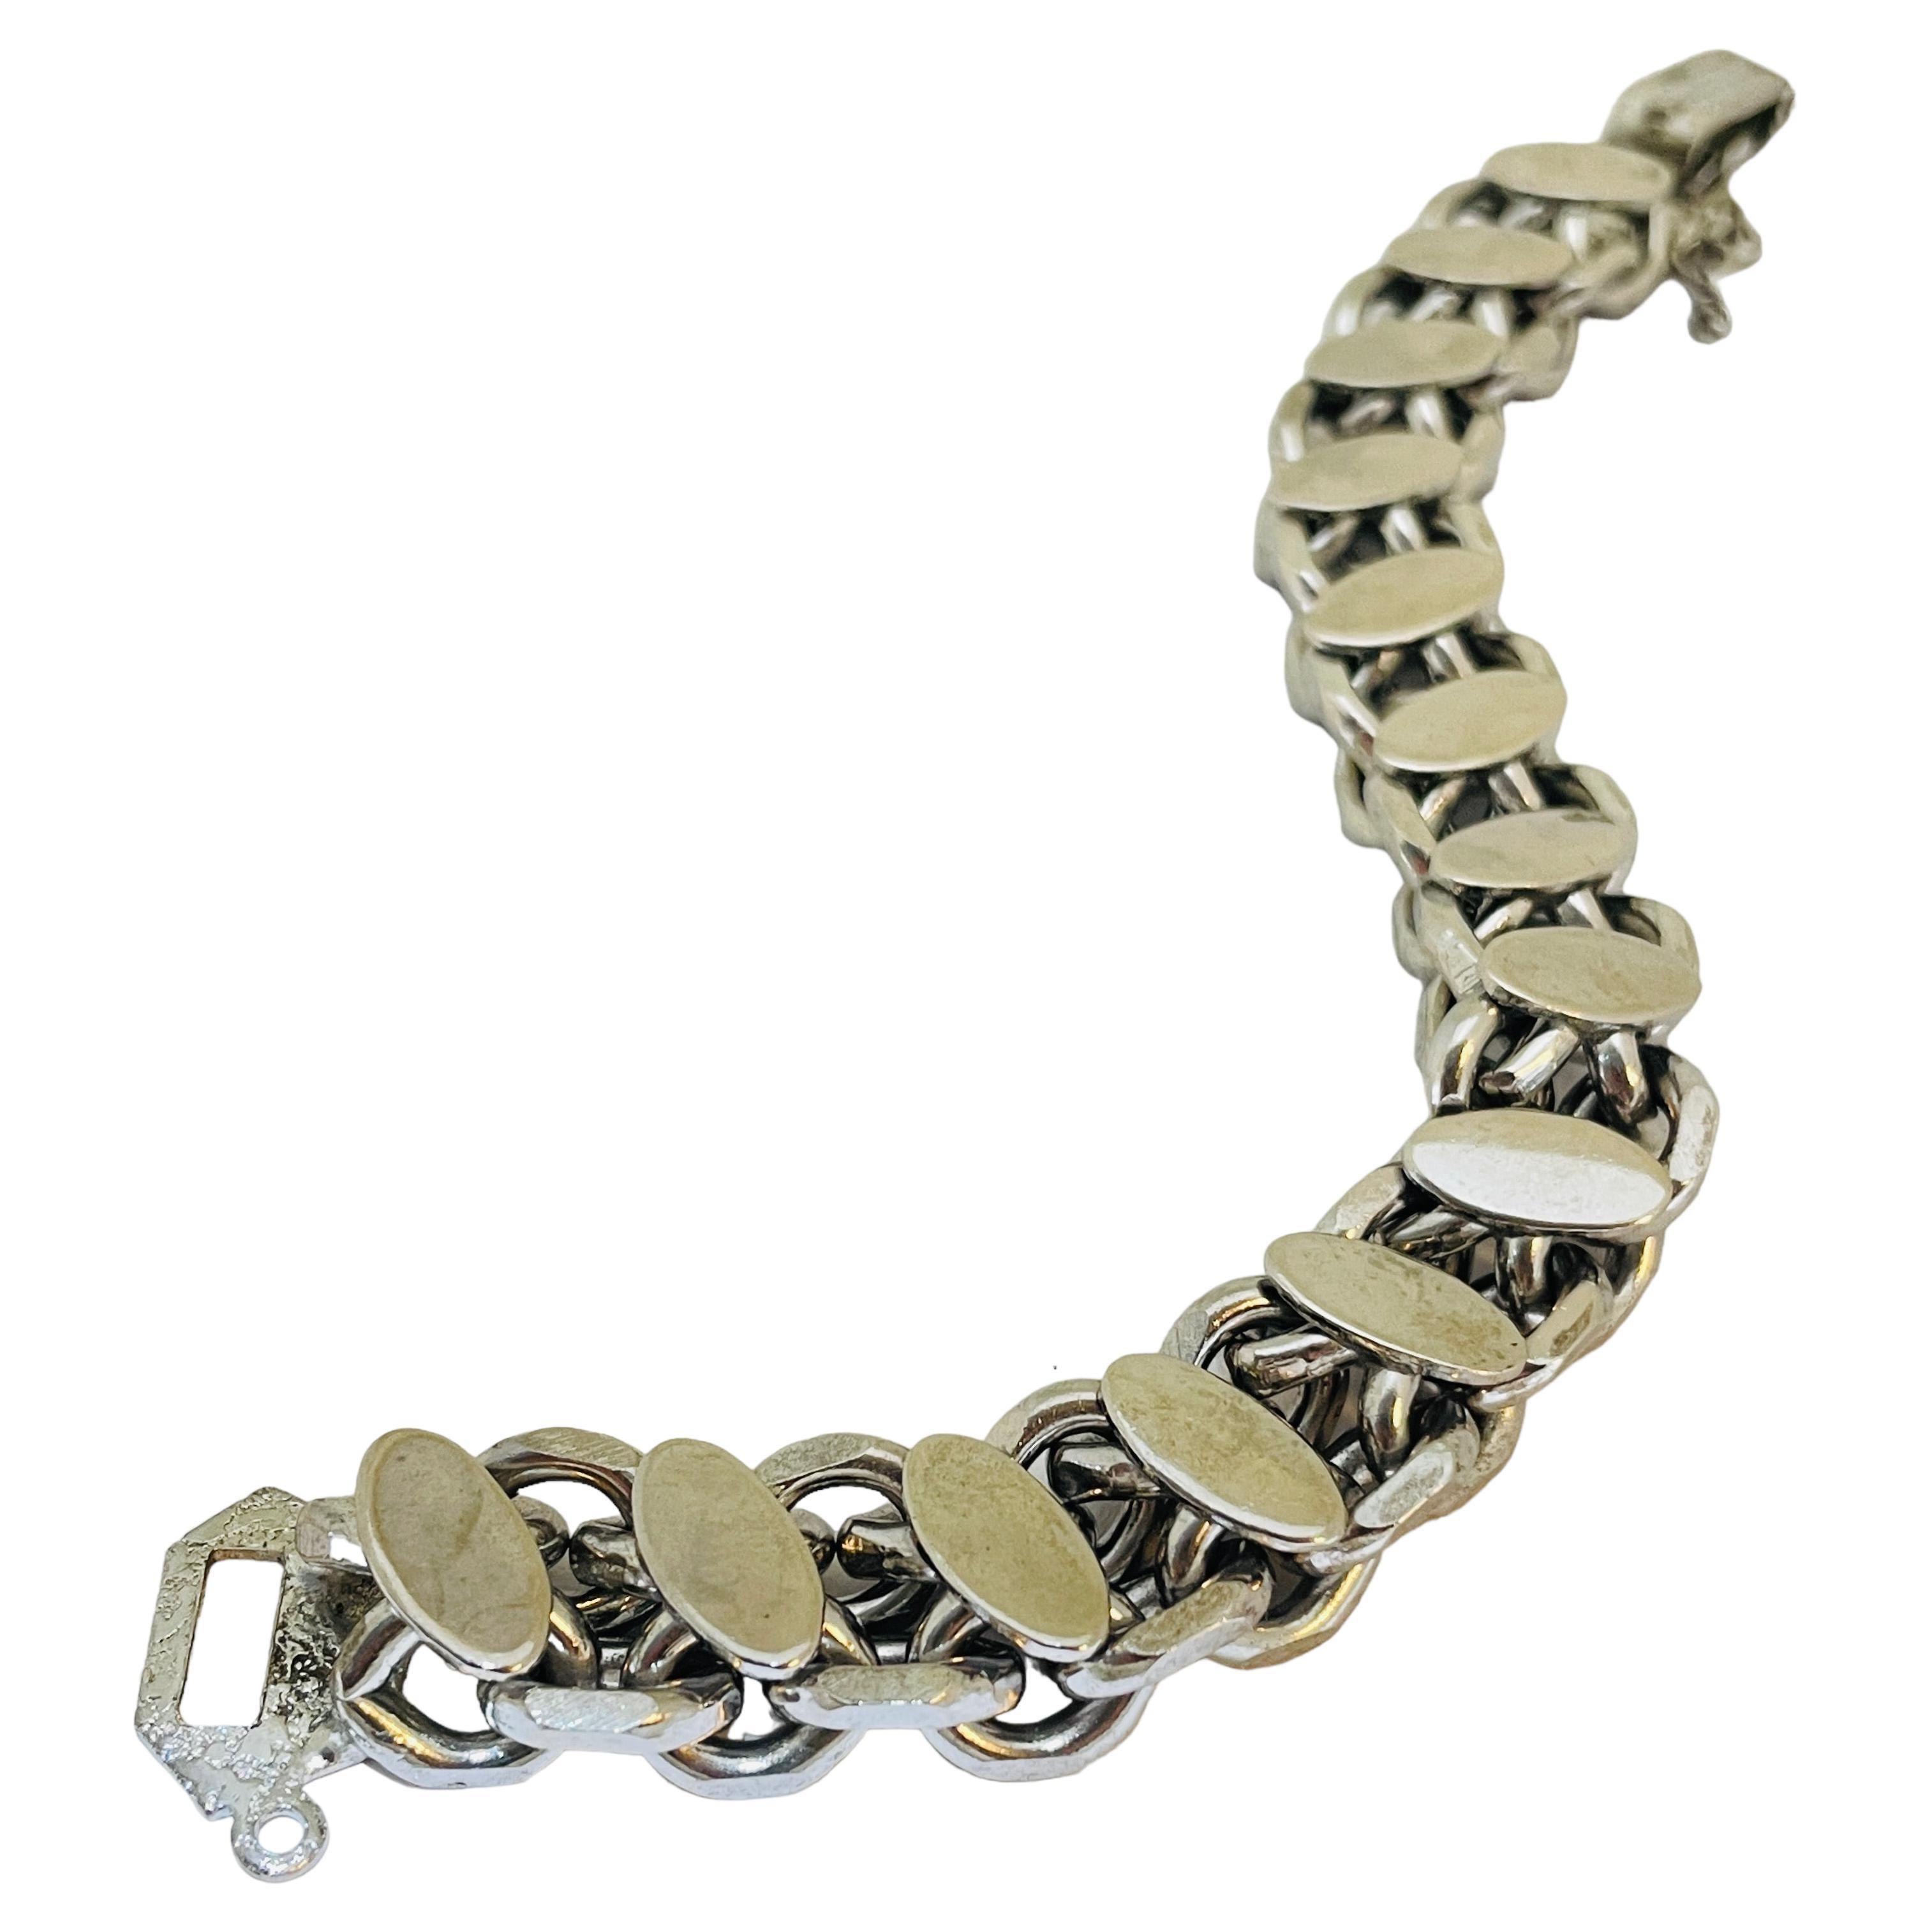 Vintage silver tone chain link bracelet